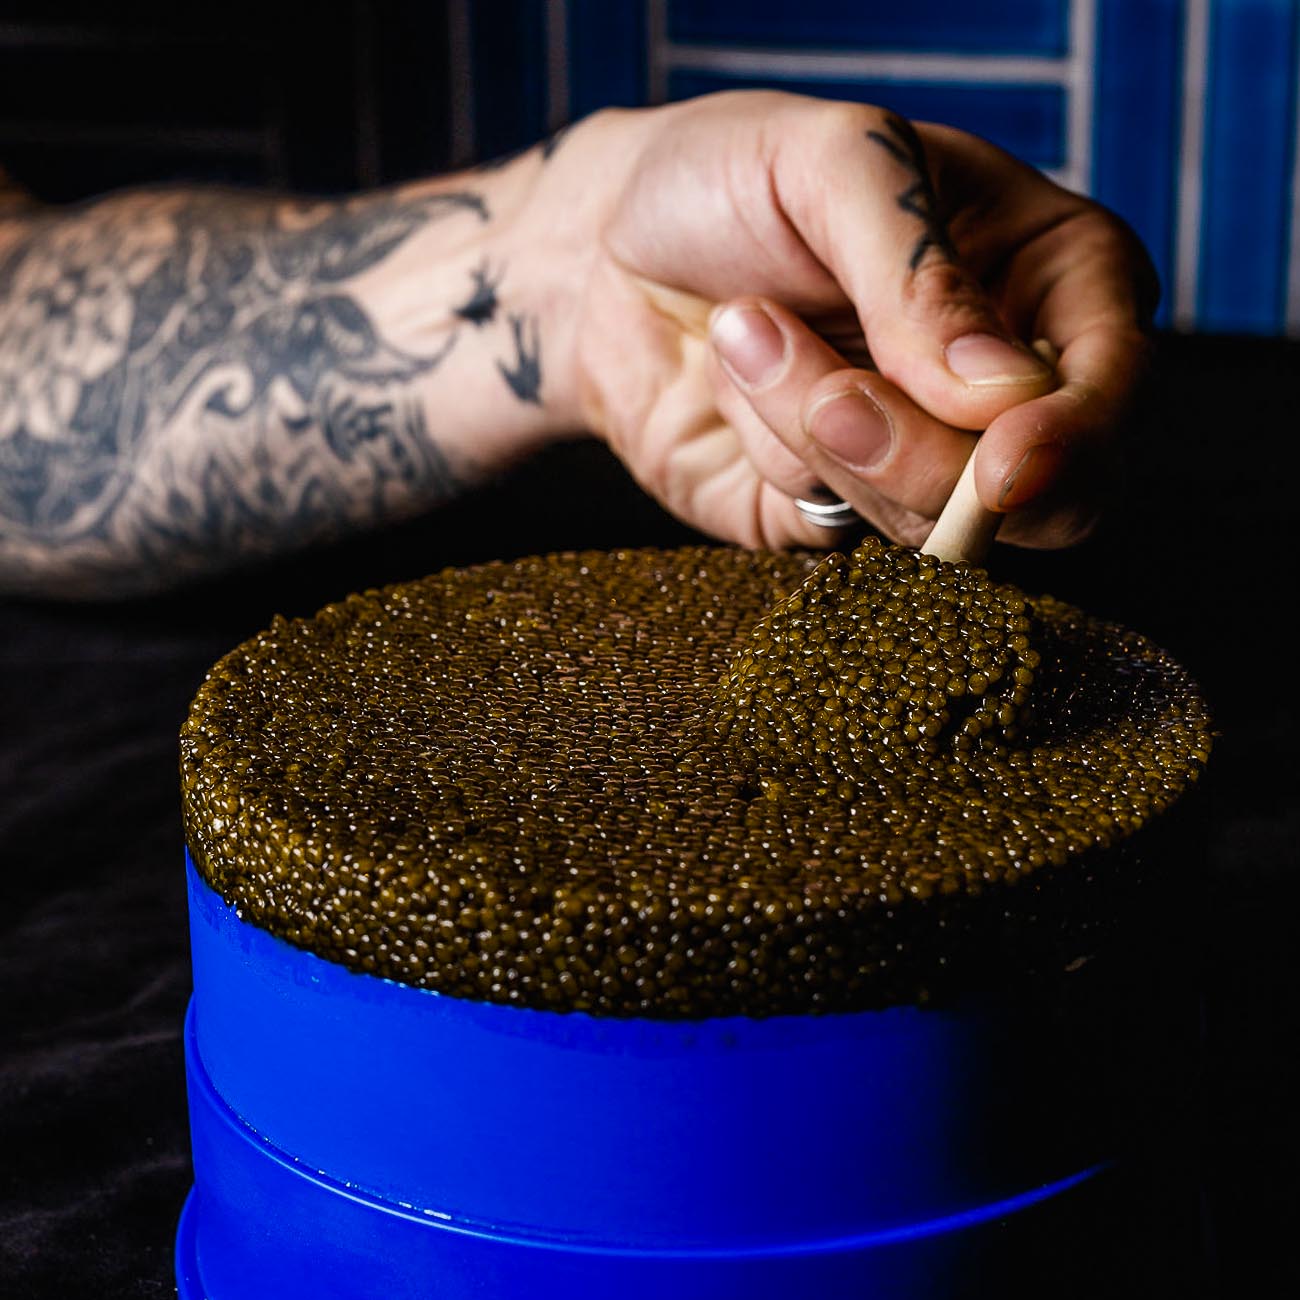 Scooping Kaluga Caviar